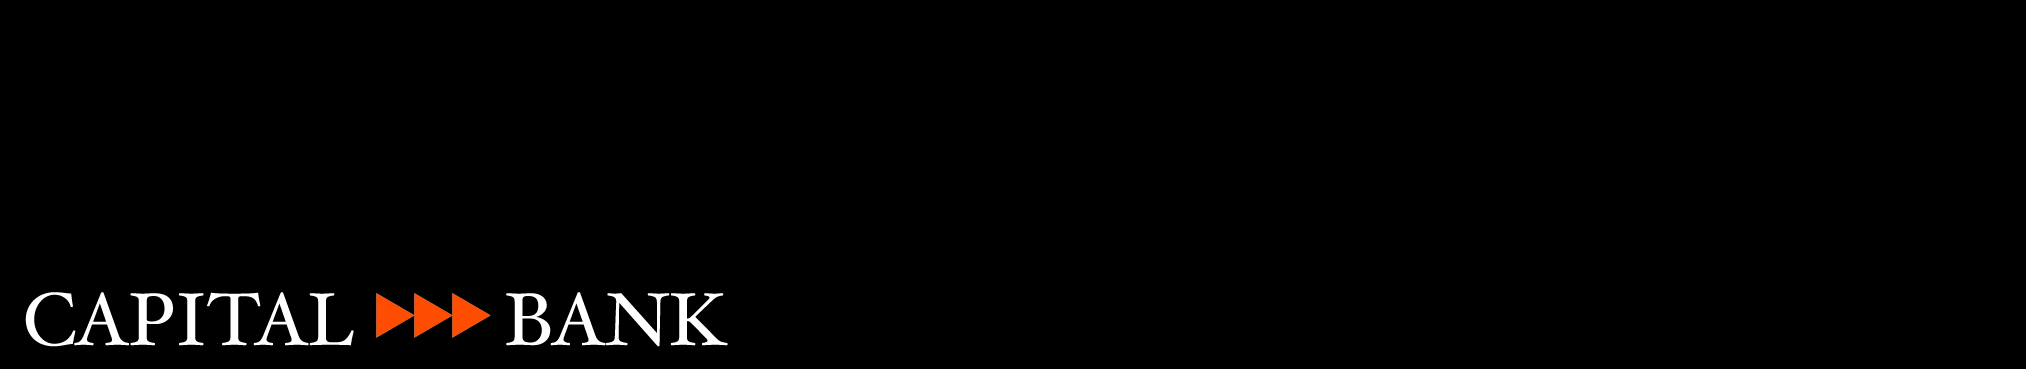 CB Logo nurBalken ohneSchrift CMYK